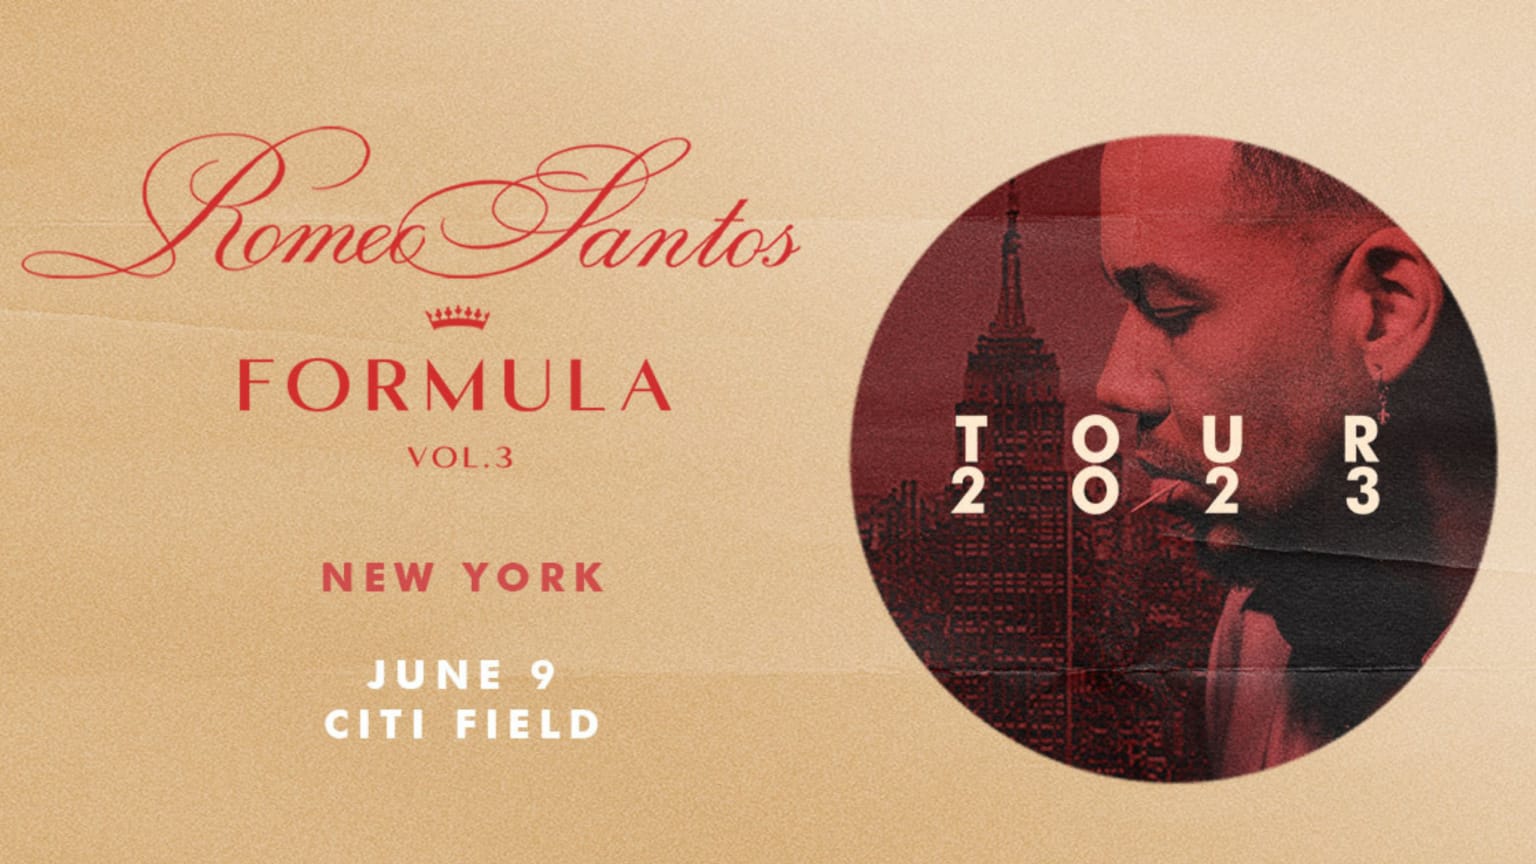 Romeo Santos Formula Vol. 3 Tour New York Mets